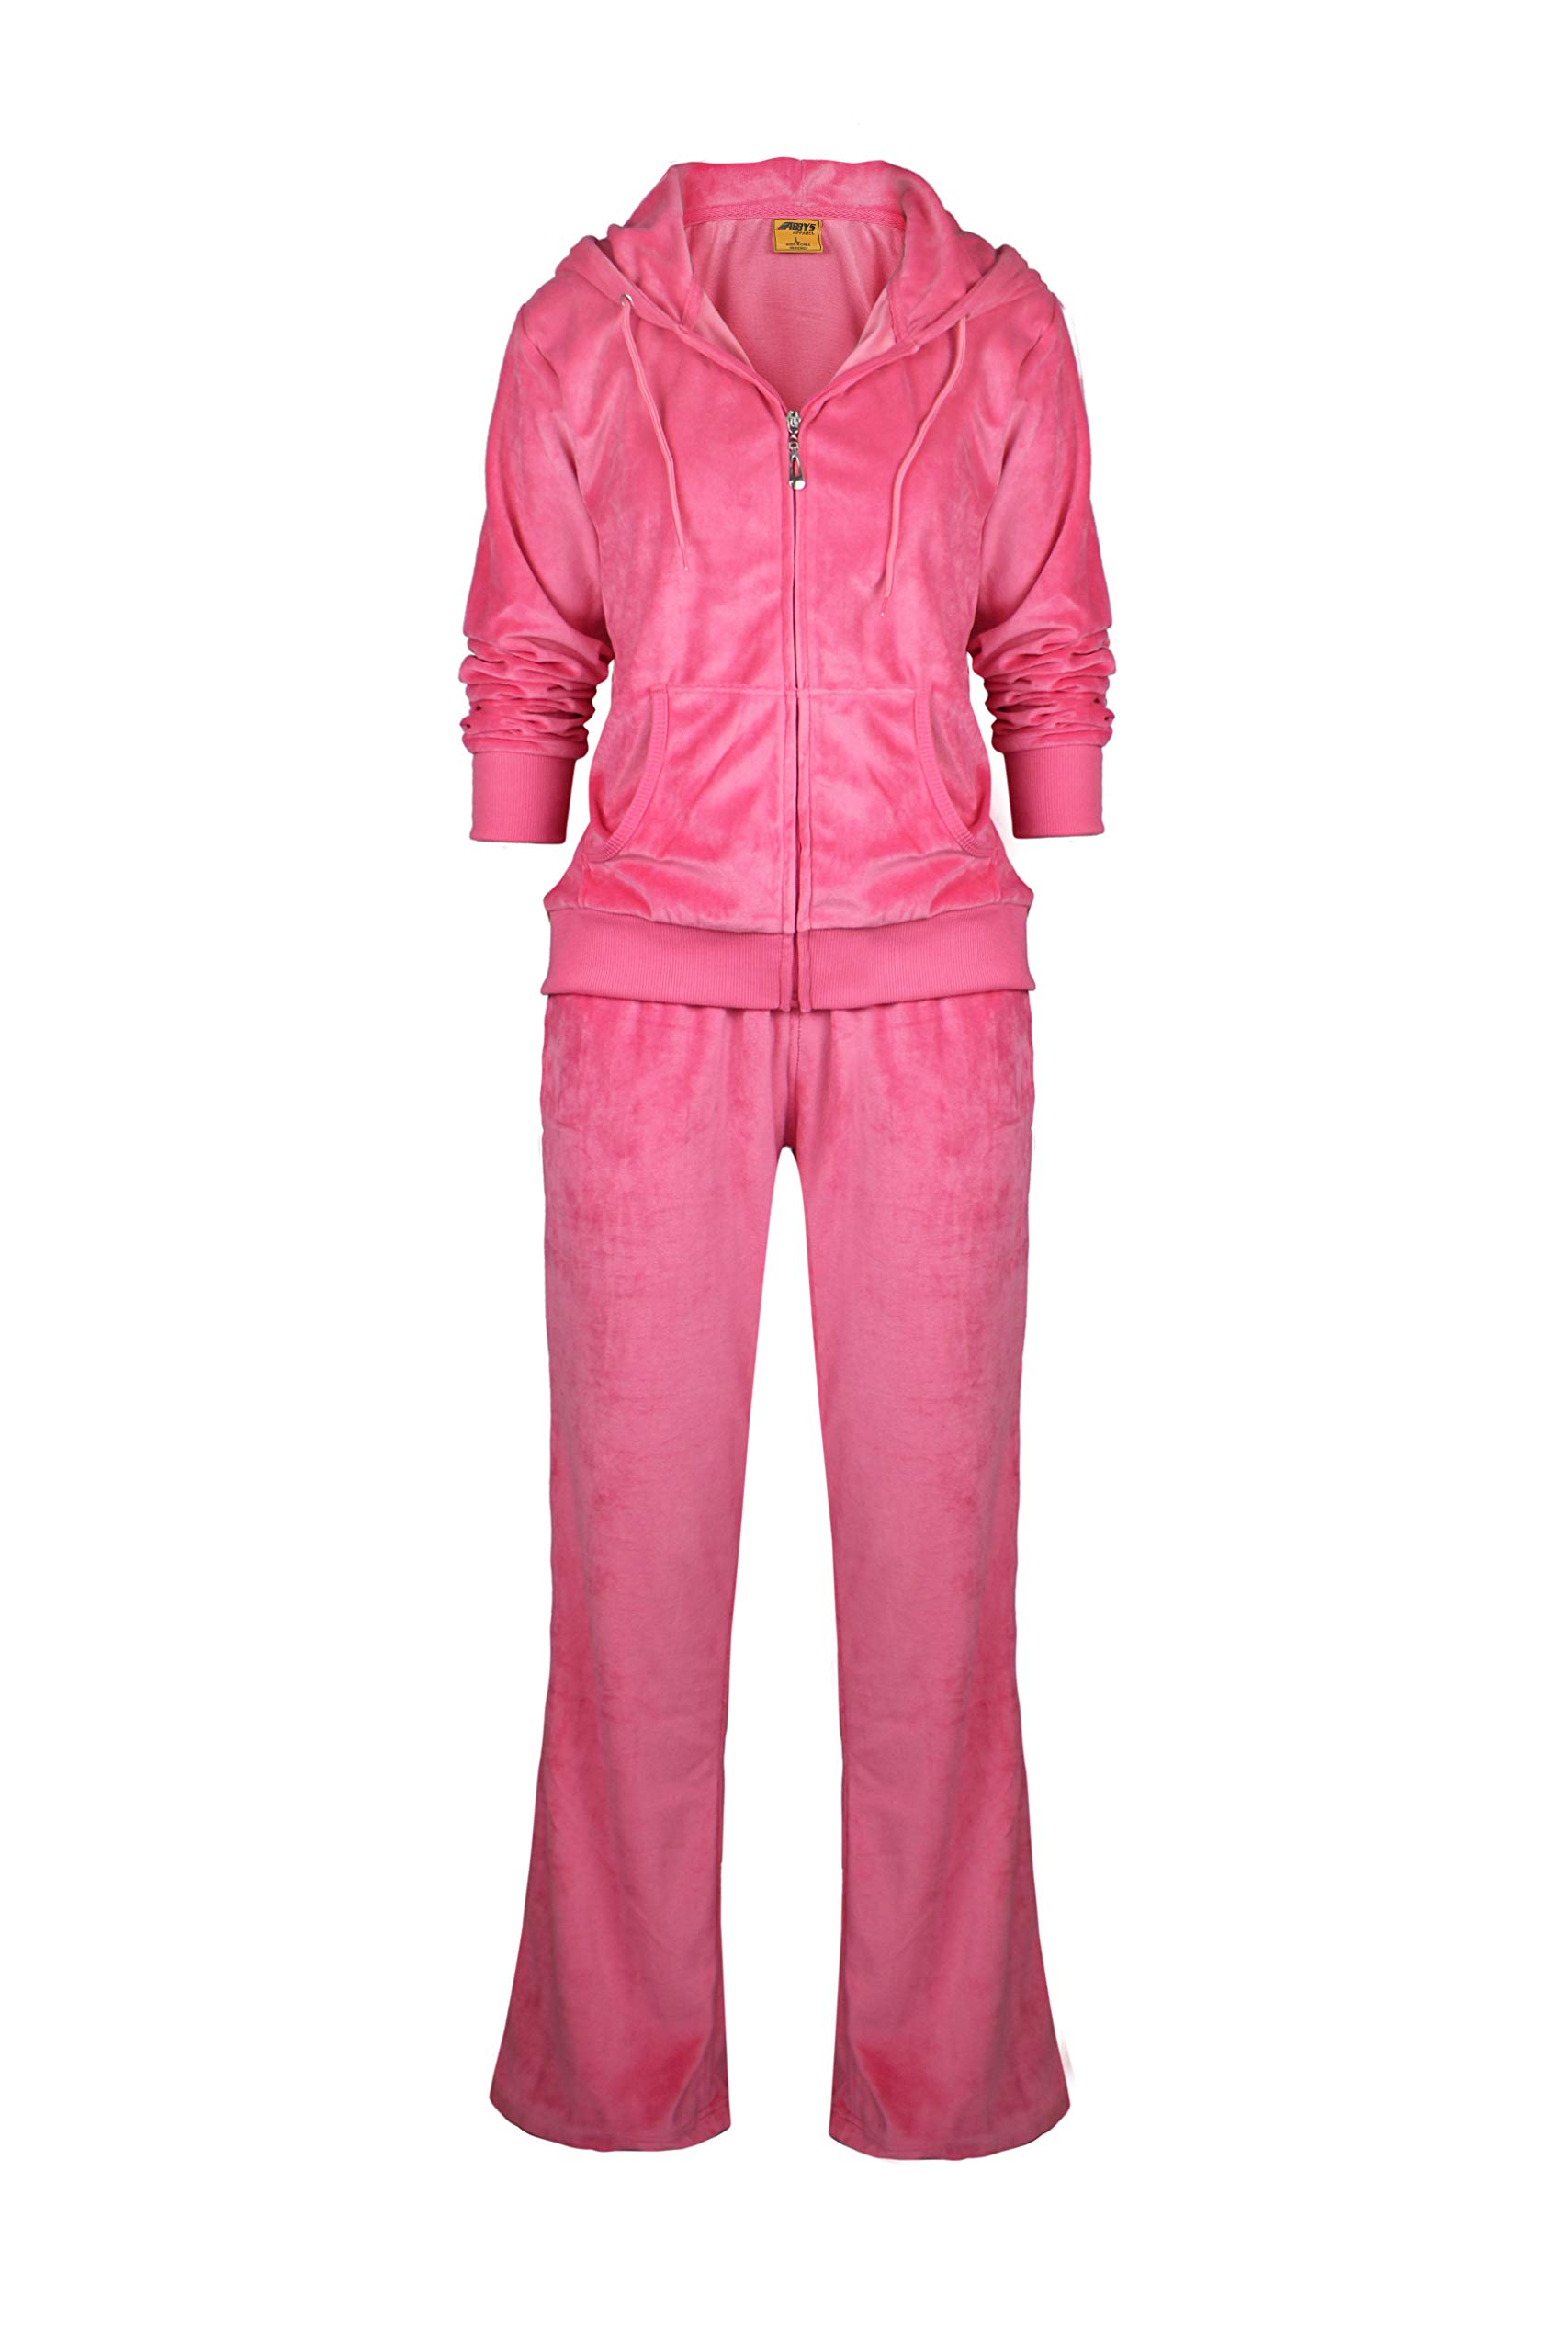  Womens Jogging Suits Sets Pink Velvet Velour Tracksuit Active  wear 2 Piece Jogging Suits Sweat Suits Outfits (S, Coral) : Clothing, Shoes  & Jewelry